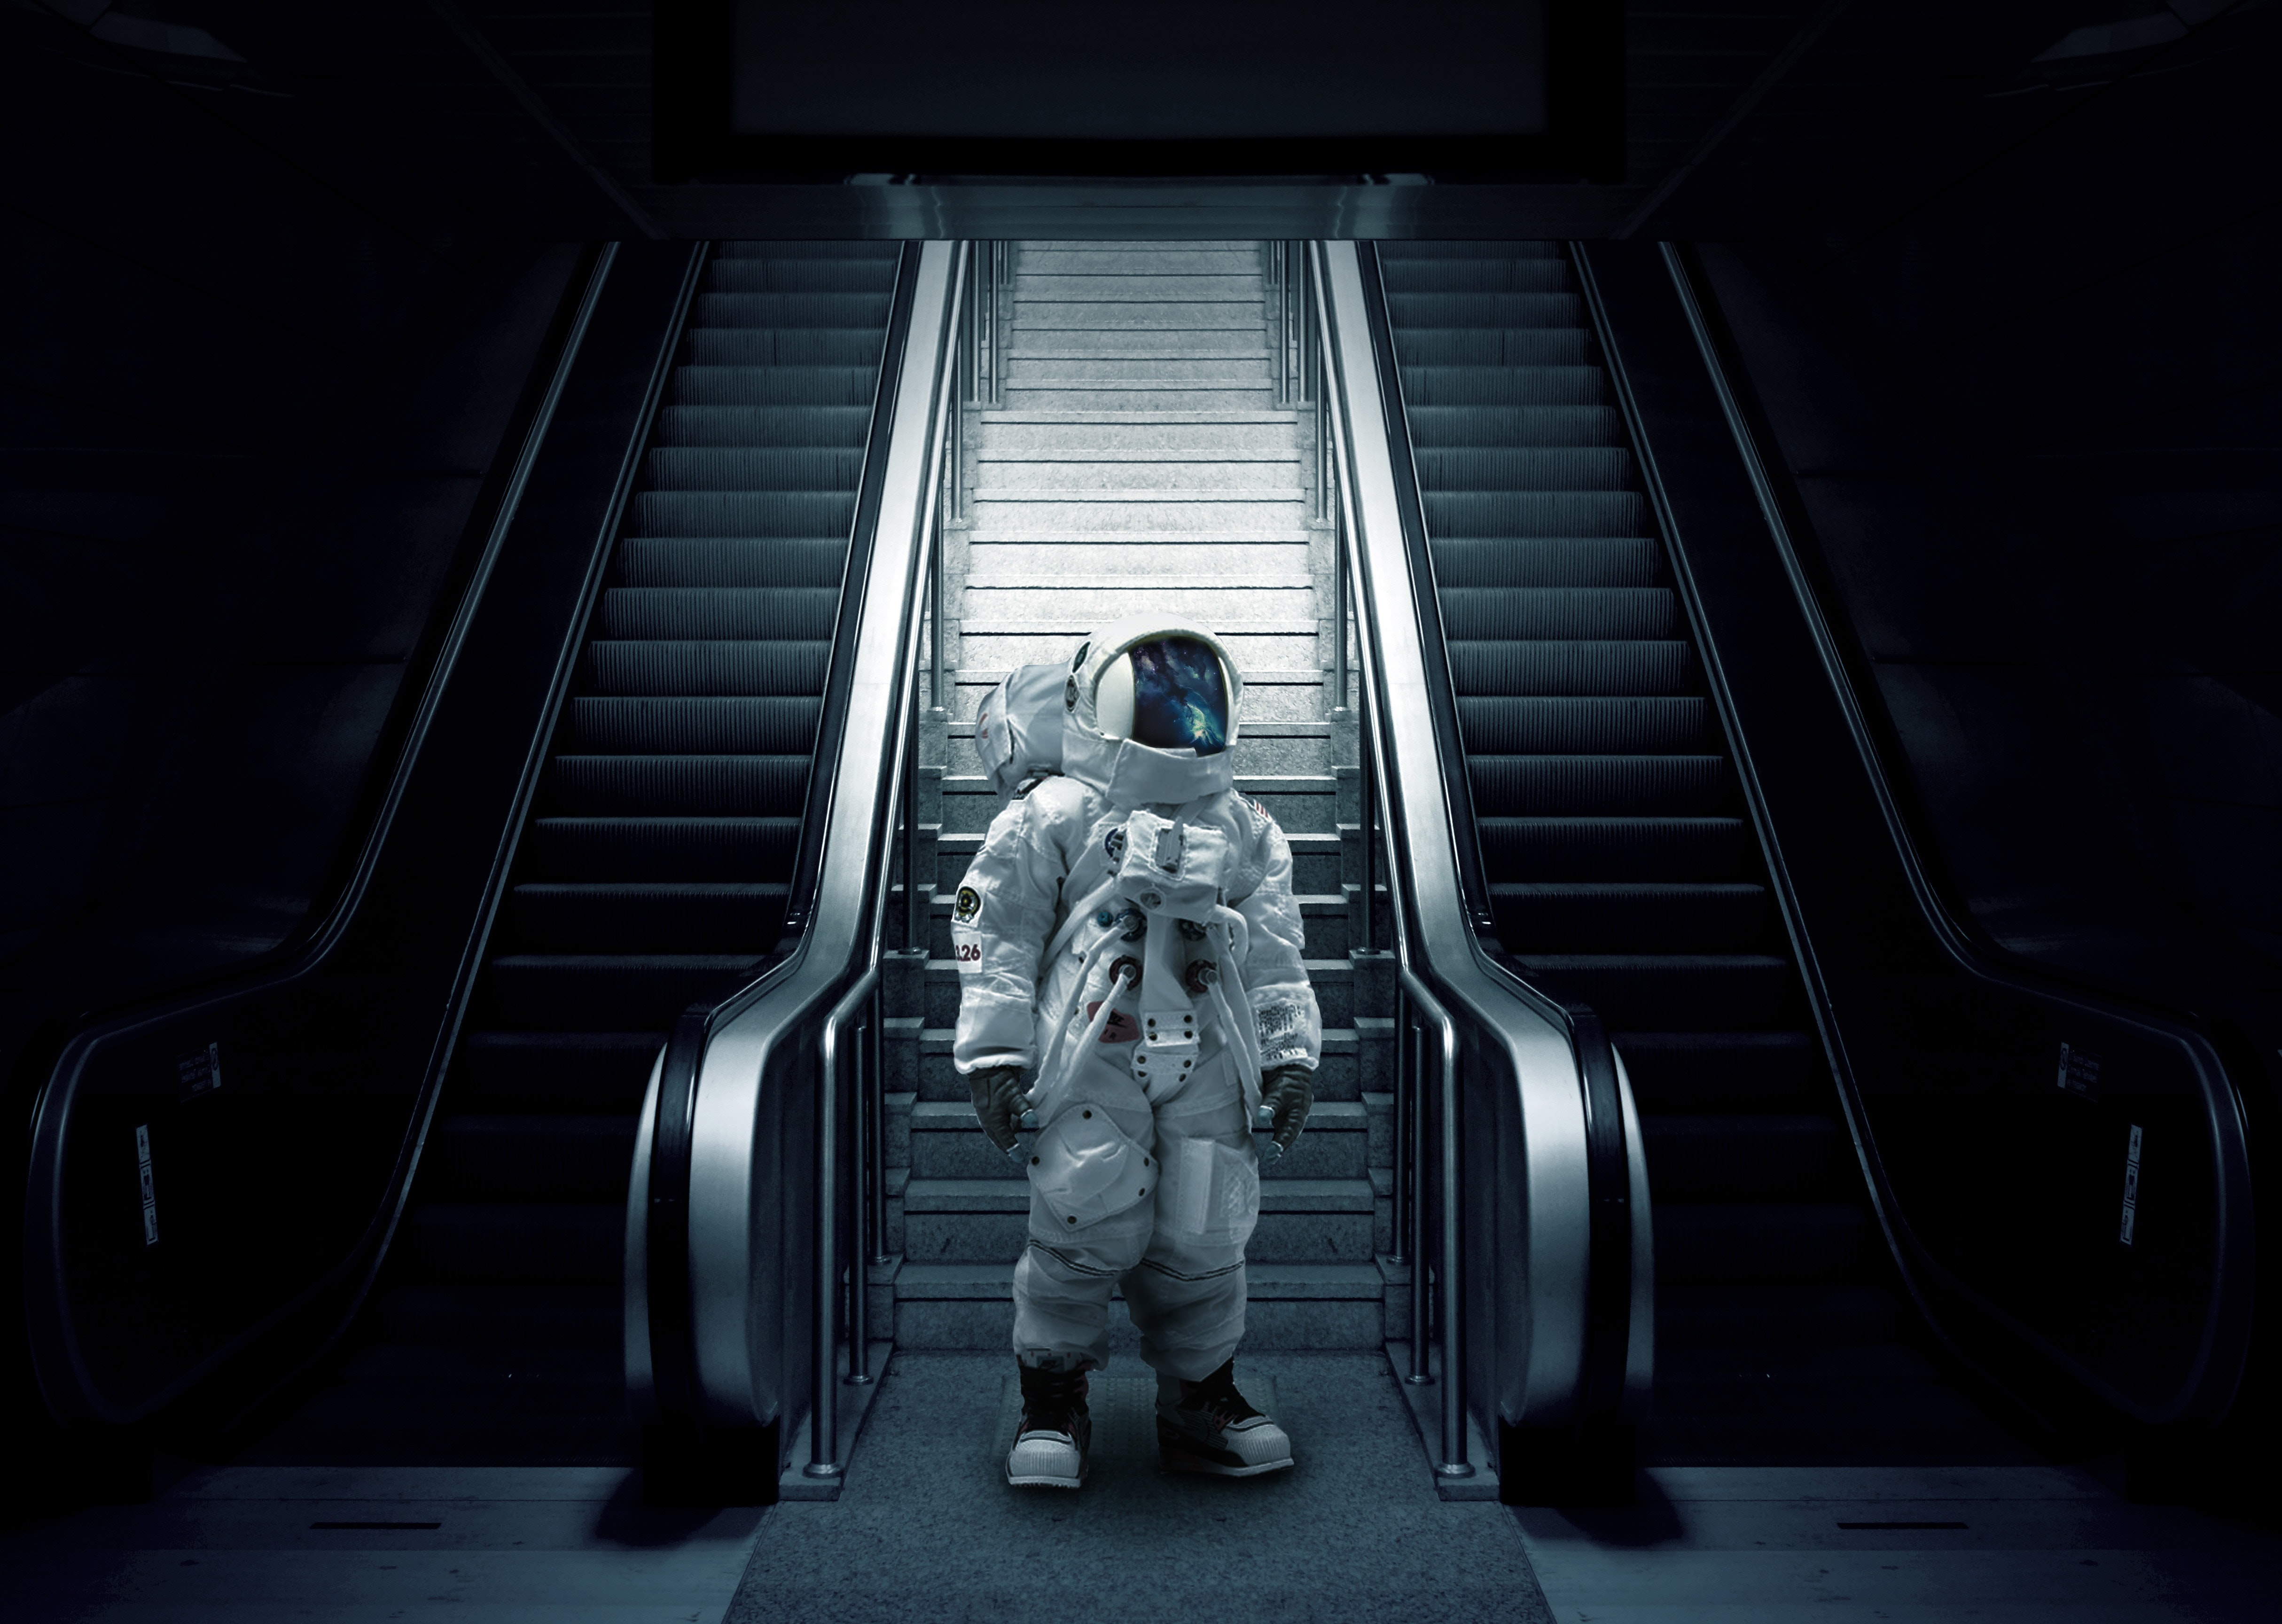 astronaut, escalator, miscellaneous, spacesuit, cosmonaut, miscellanea, stairs, ladder, space suit